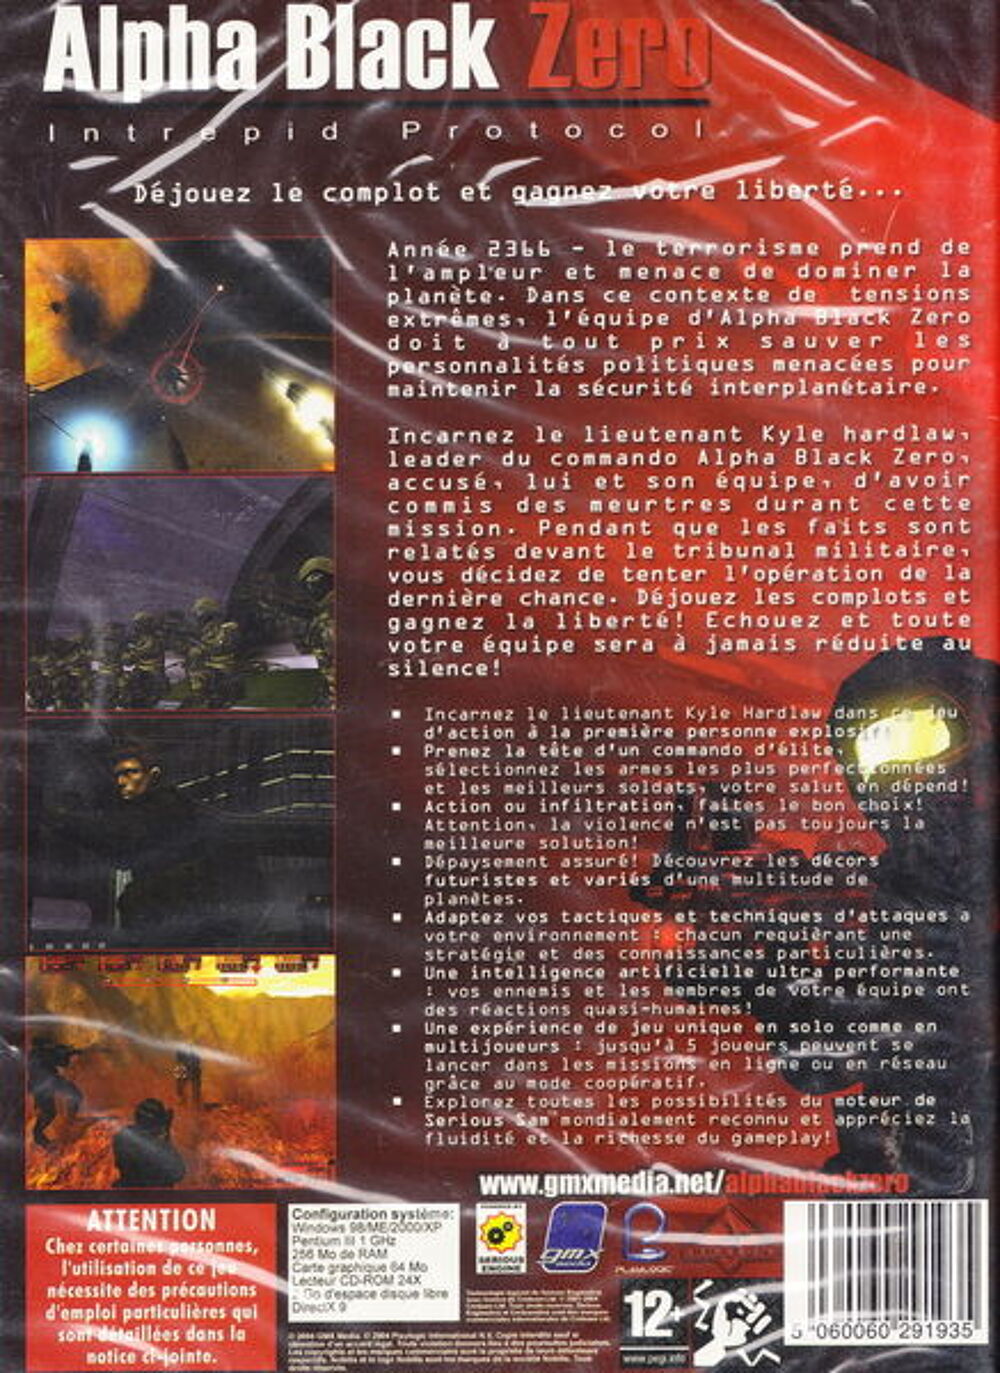 CD Jeu PC Alpha Black Zero intrepid protocol NEUF blister
Consoles et jeux vidos